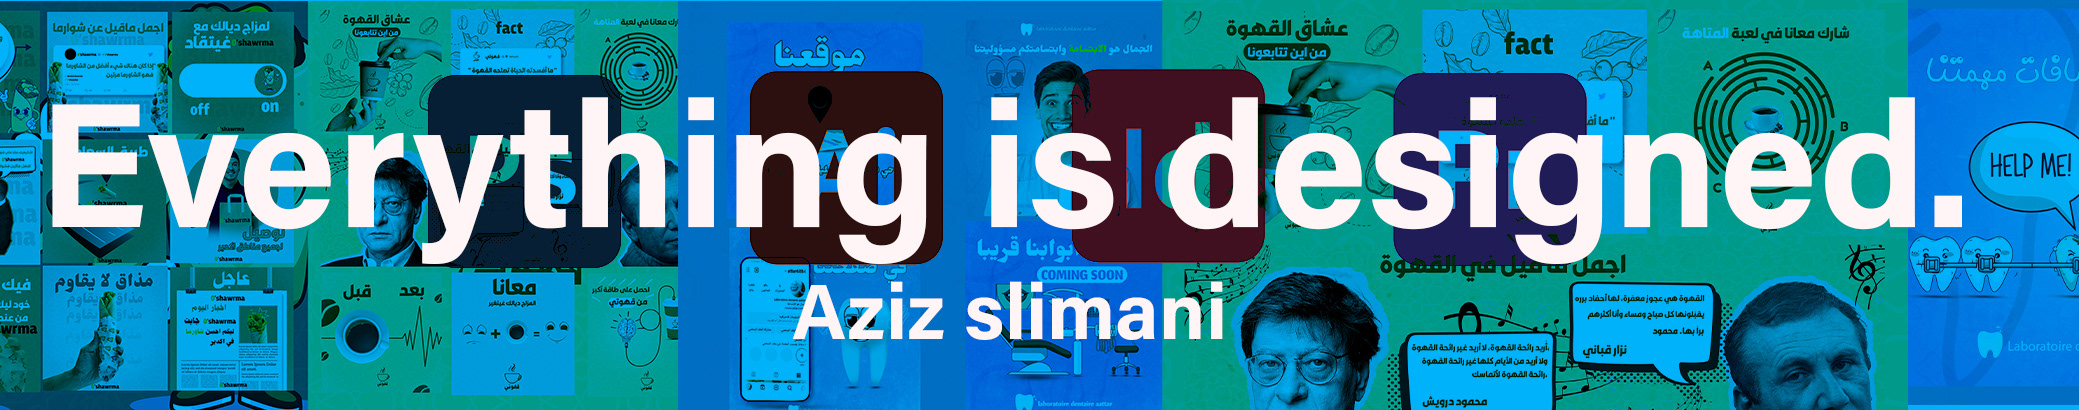 Aziz slimani's profile banner